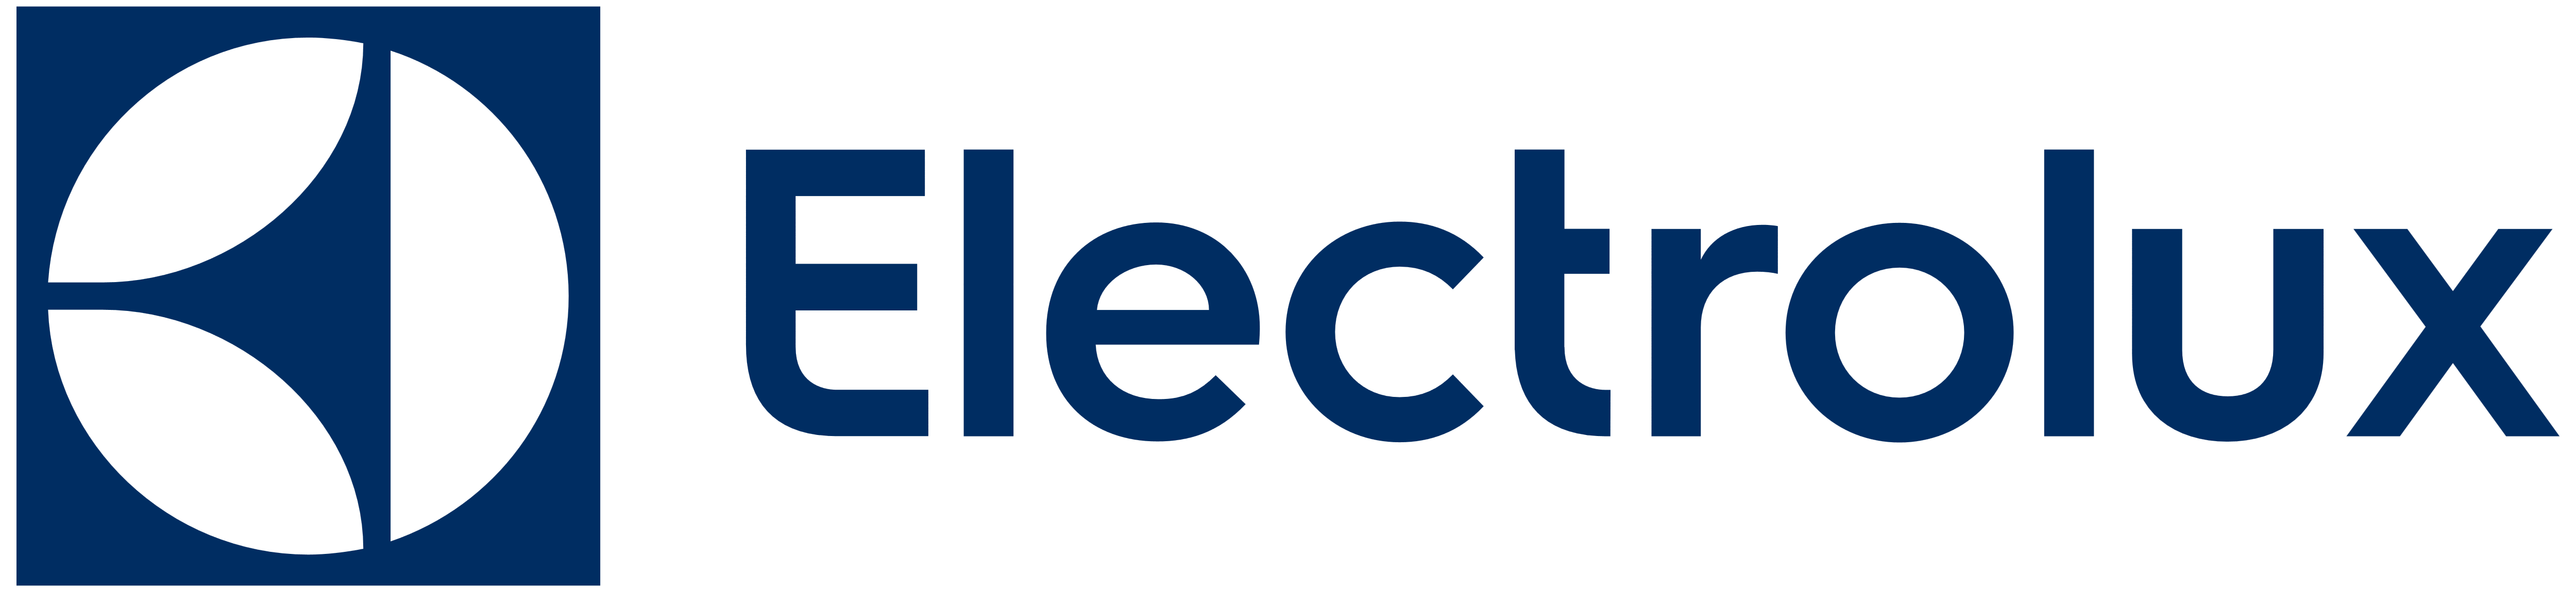 Electrolux_logo_new